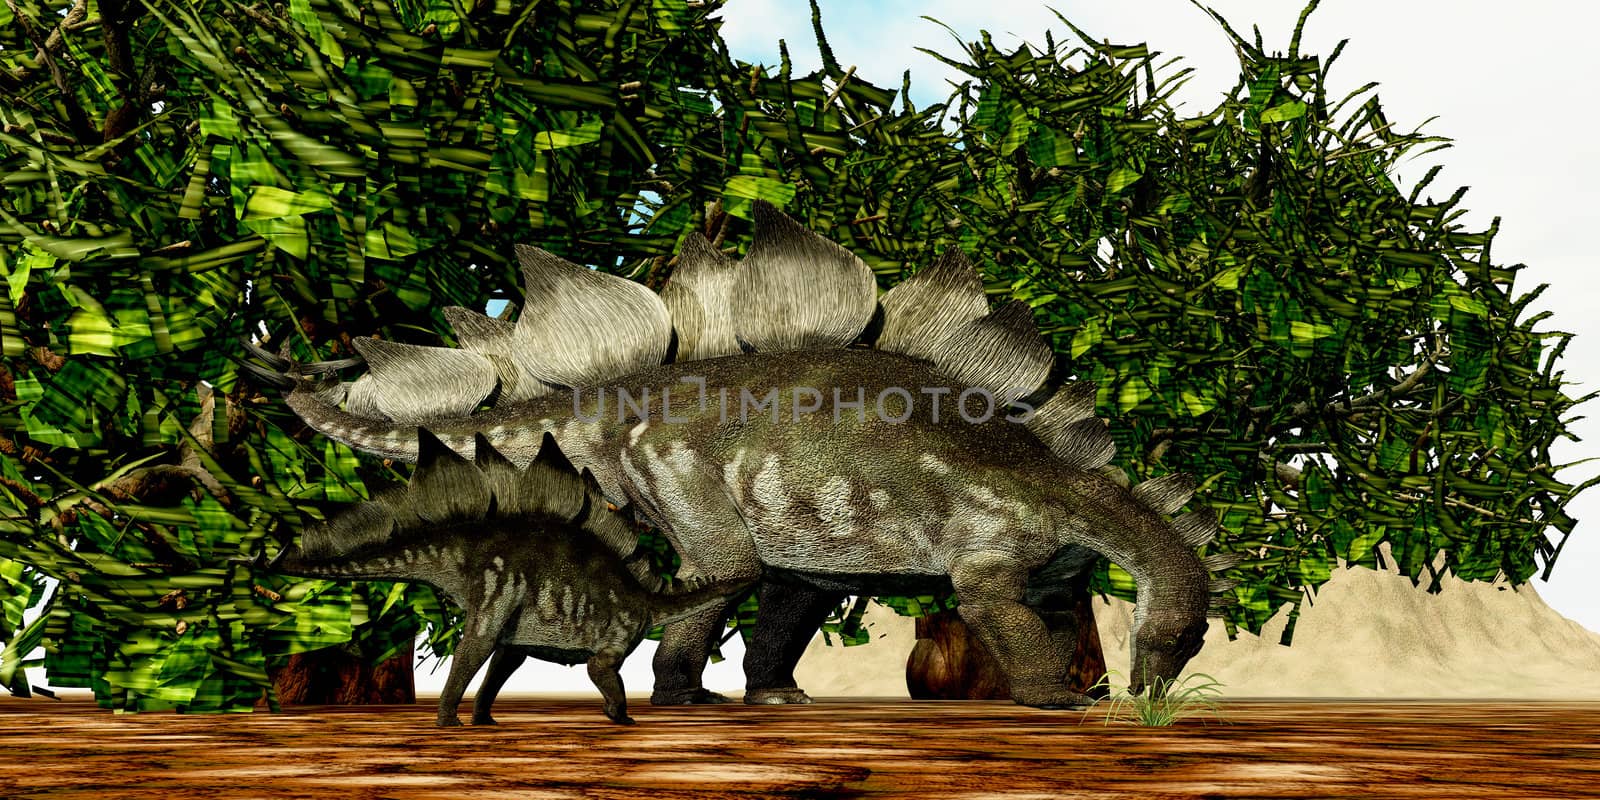 Stegosaurus 03 by Catmando